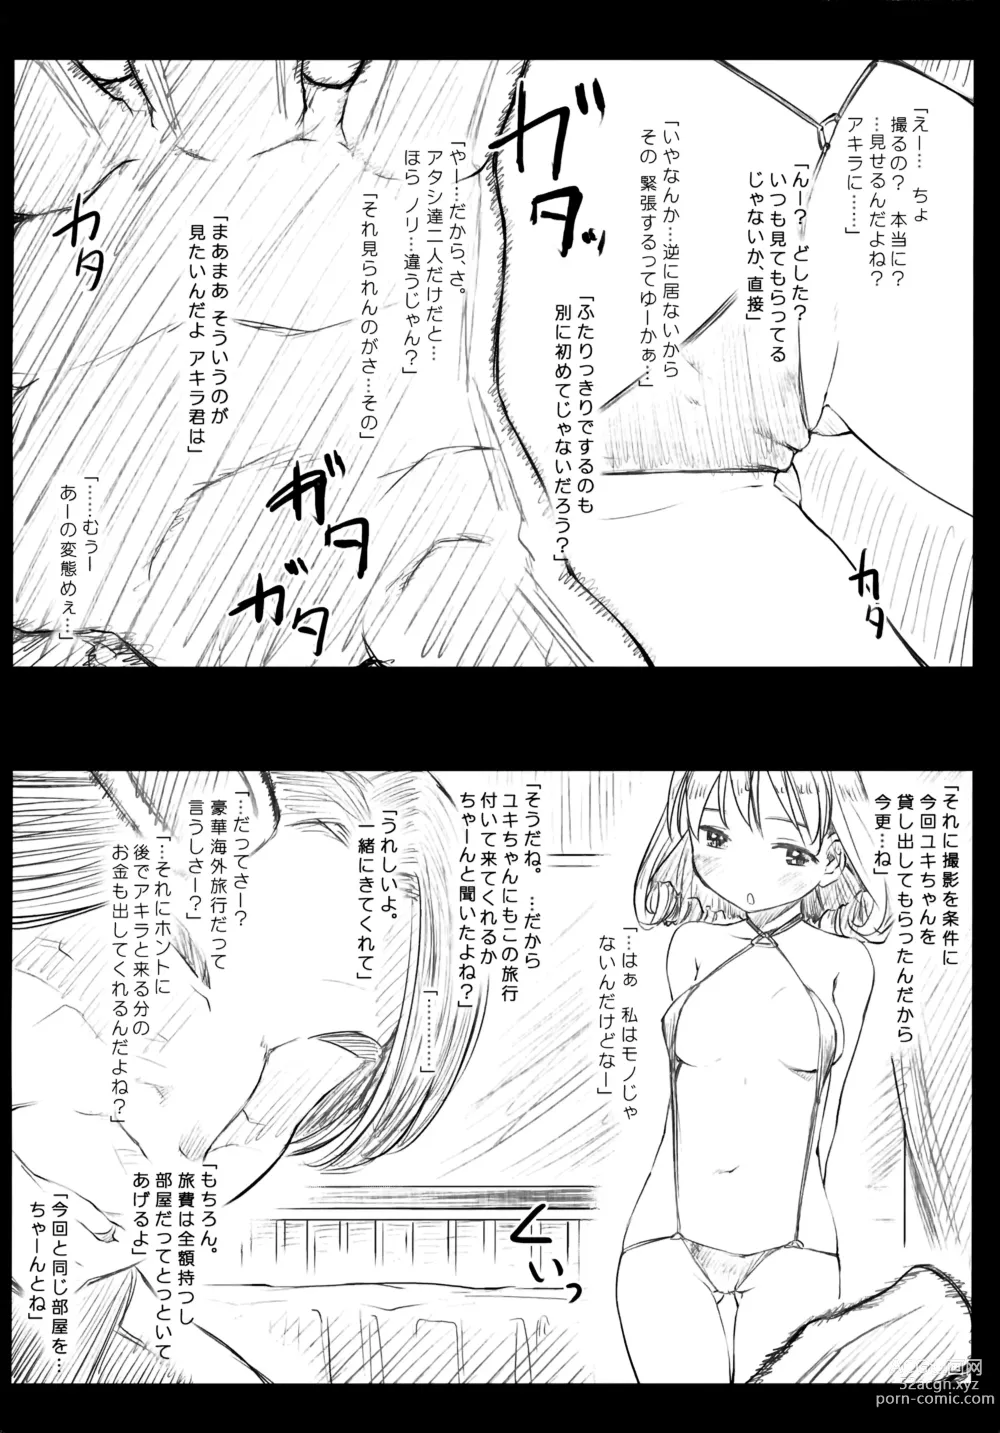 Page 2 of manga MISDIRECTION Toranoana Gentei Shousasshi